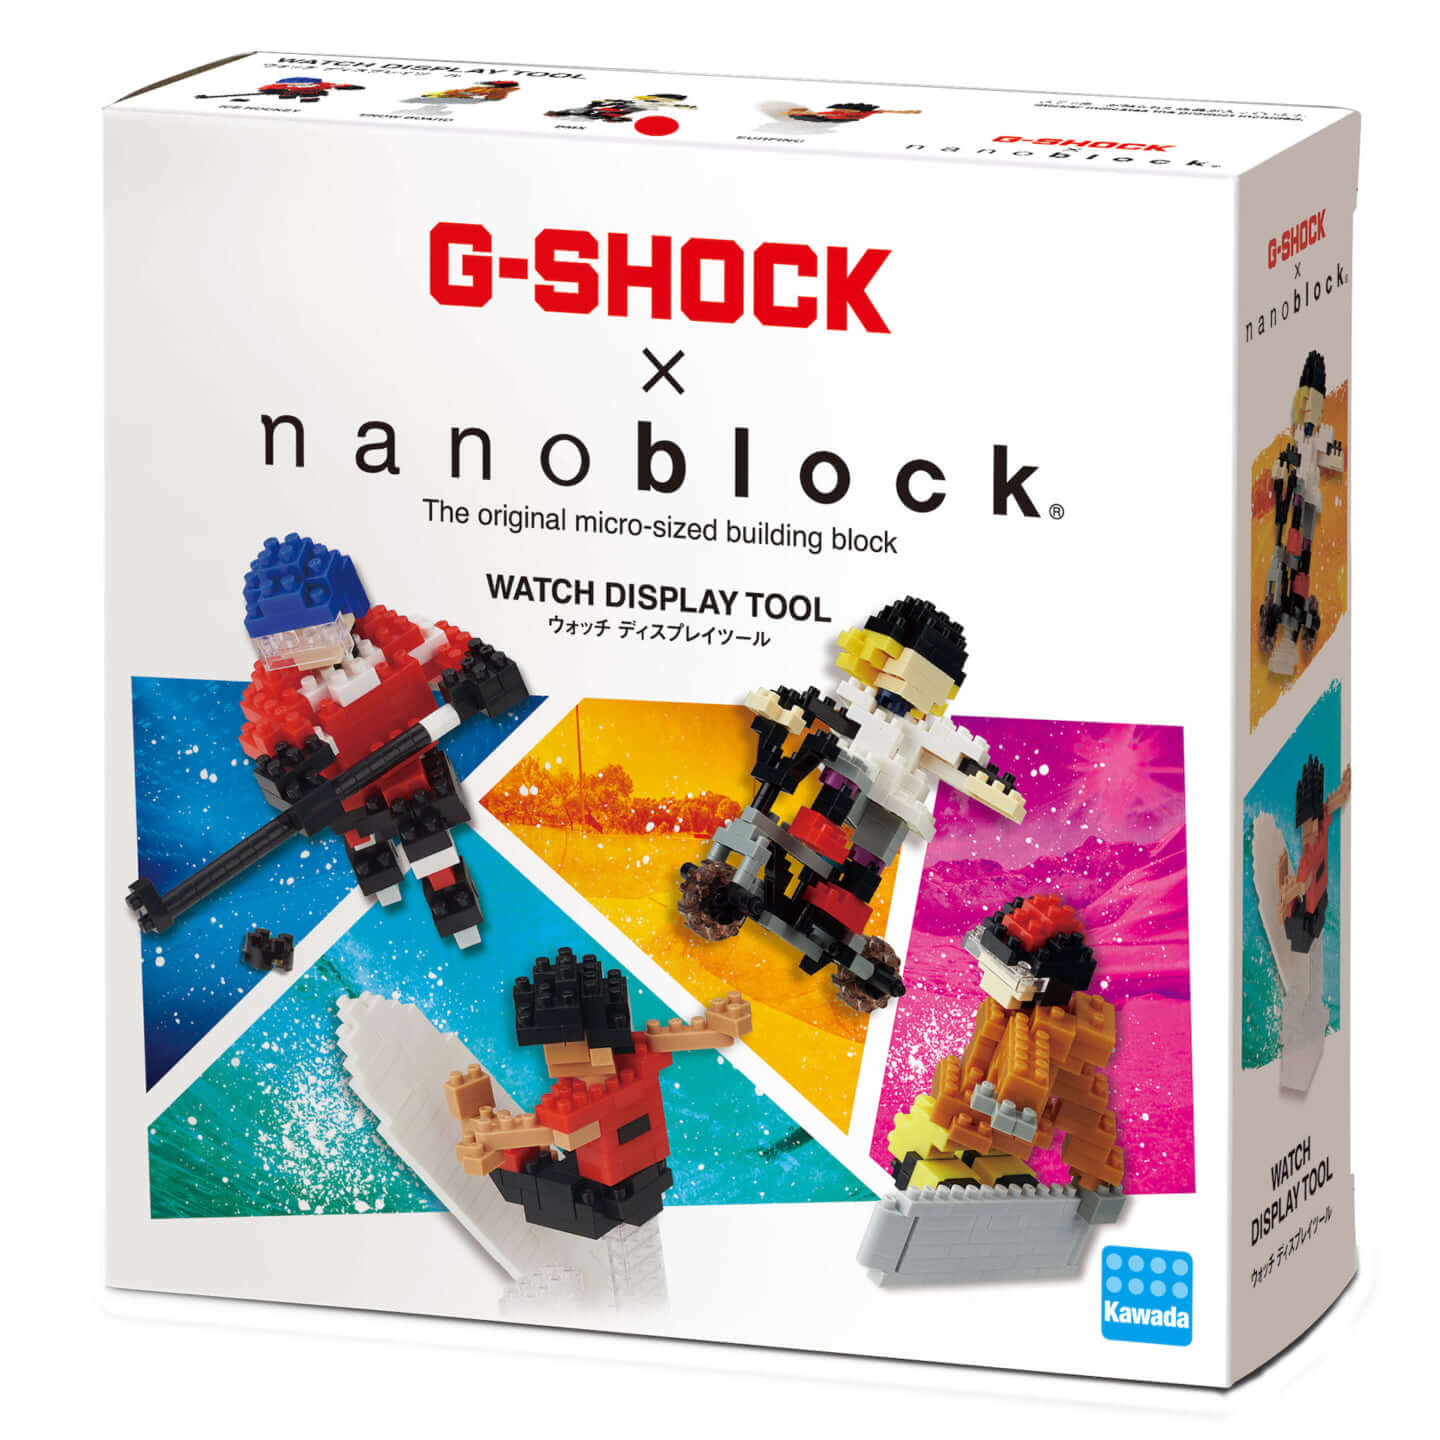 G-SHOCK×nanoblock(R)スポーツアクションのコラボブロック登場！ディスプレイツールにも lifefashion191128_gshock_nanobloc_05-1440x1440